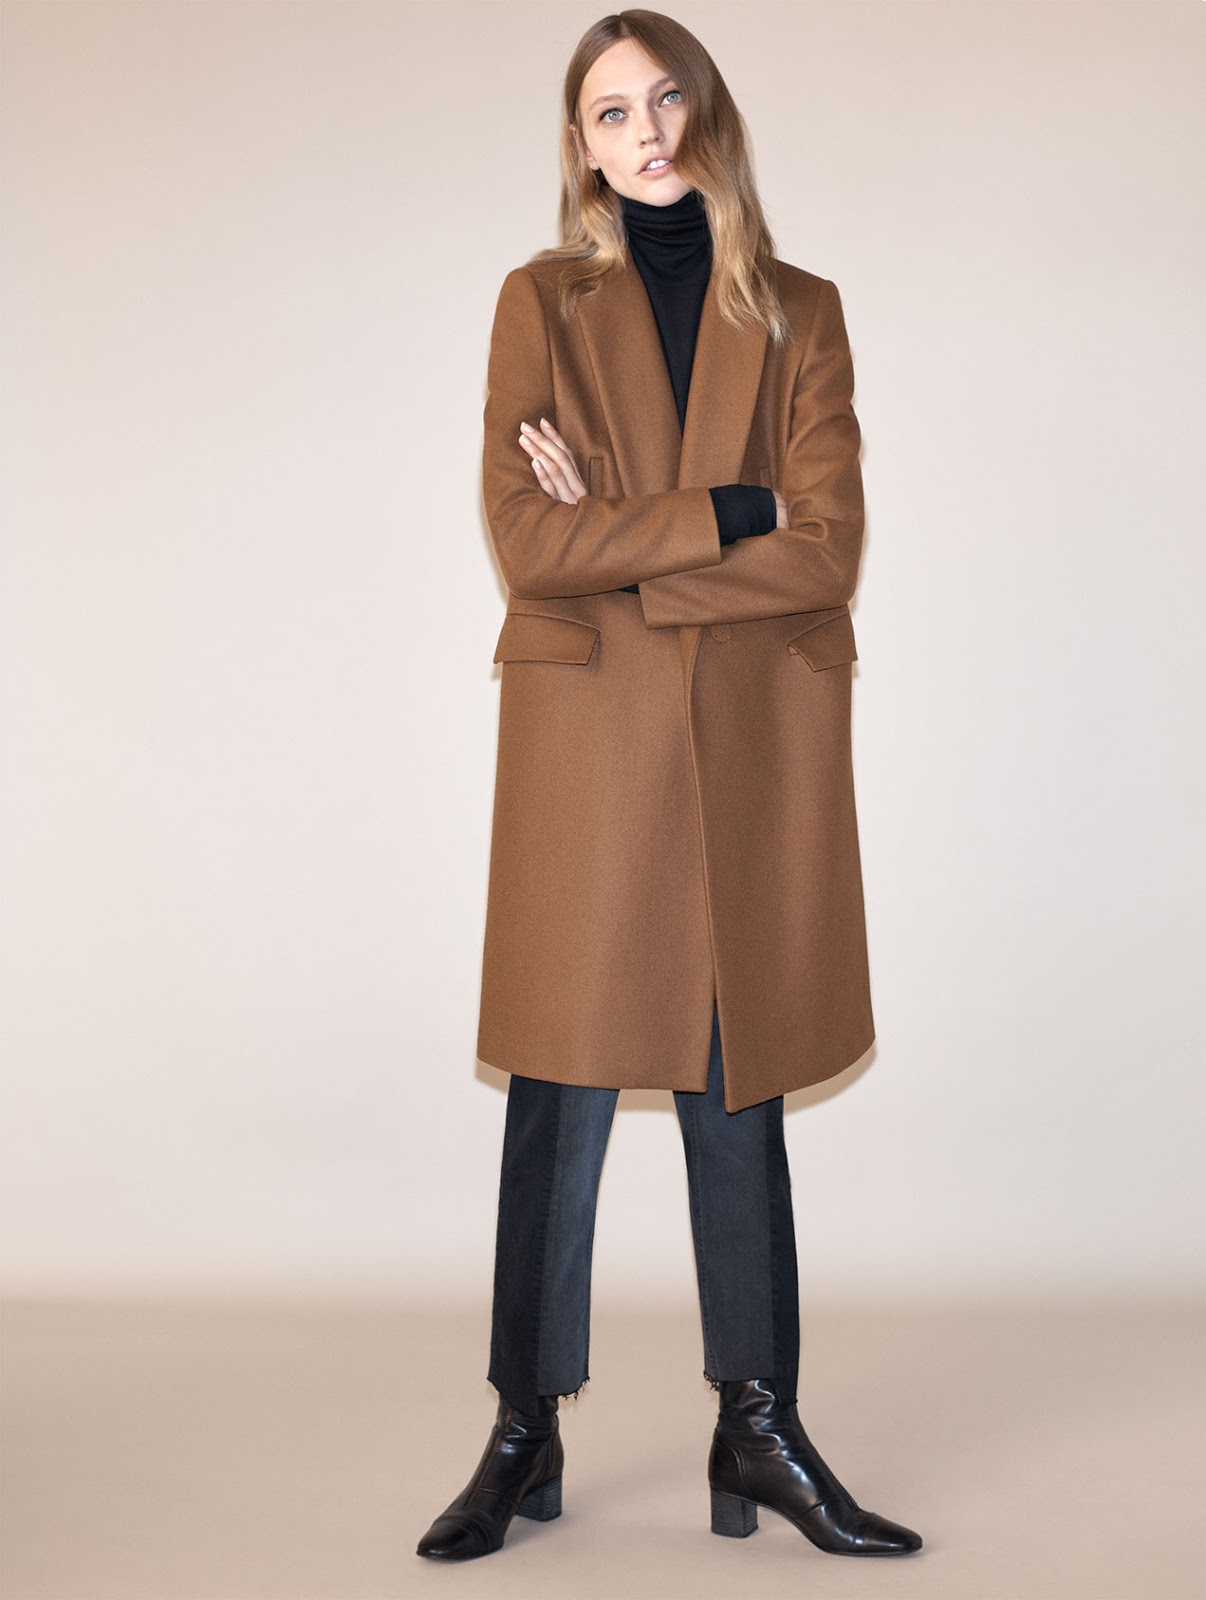 Sasha Pivovarova Wears the Best of Zara's Winter 2016 Coats